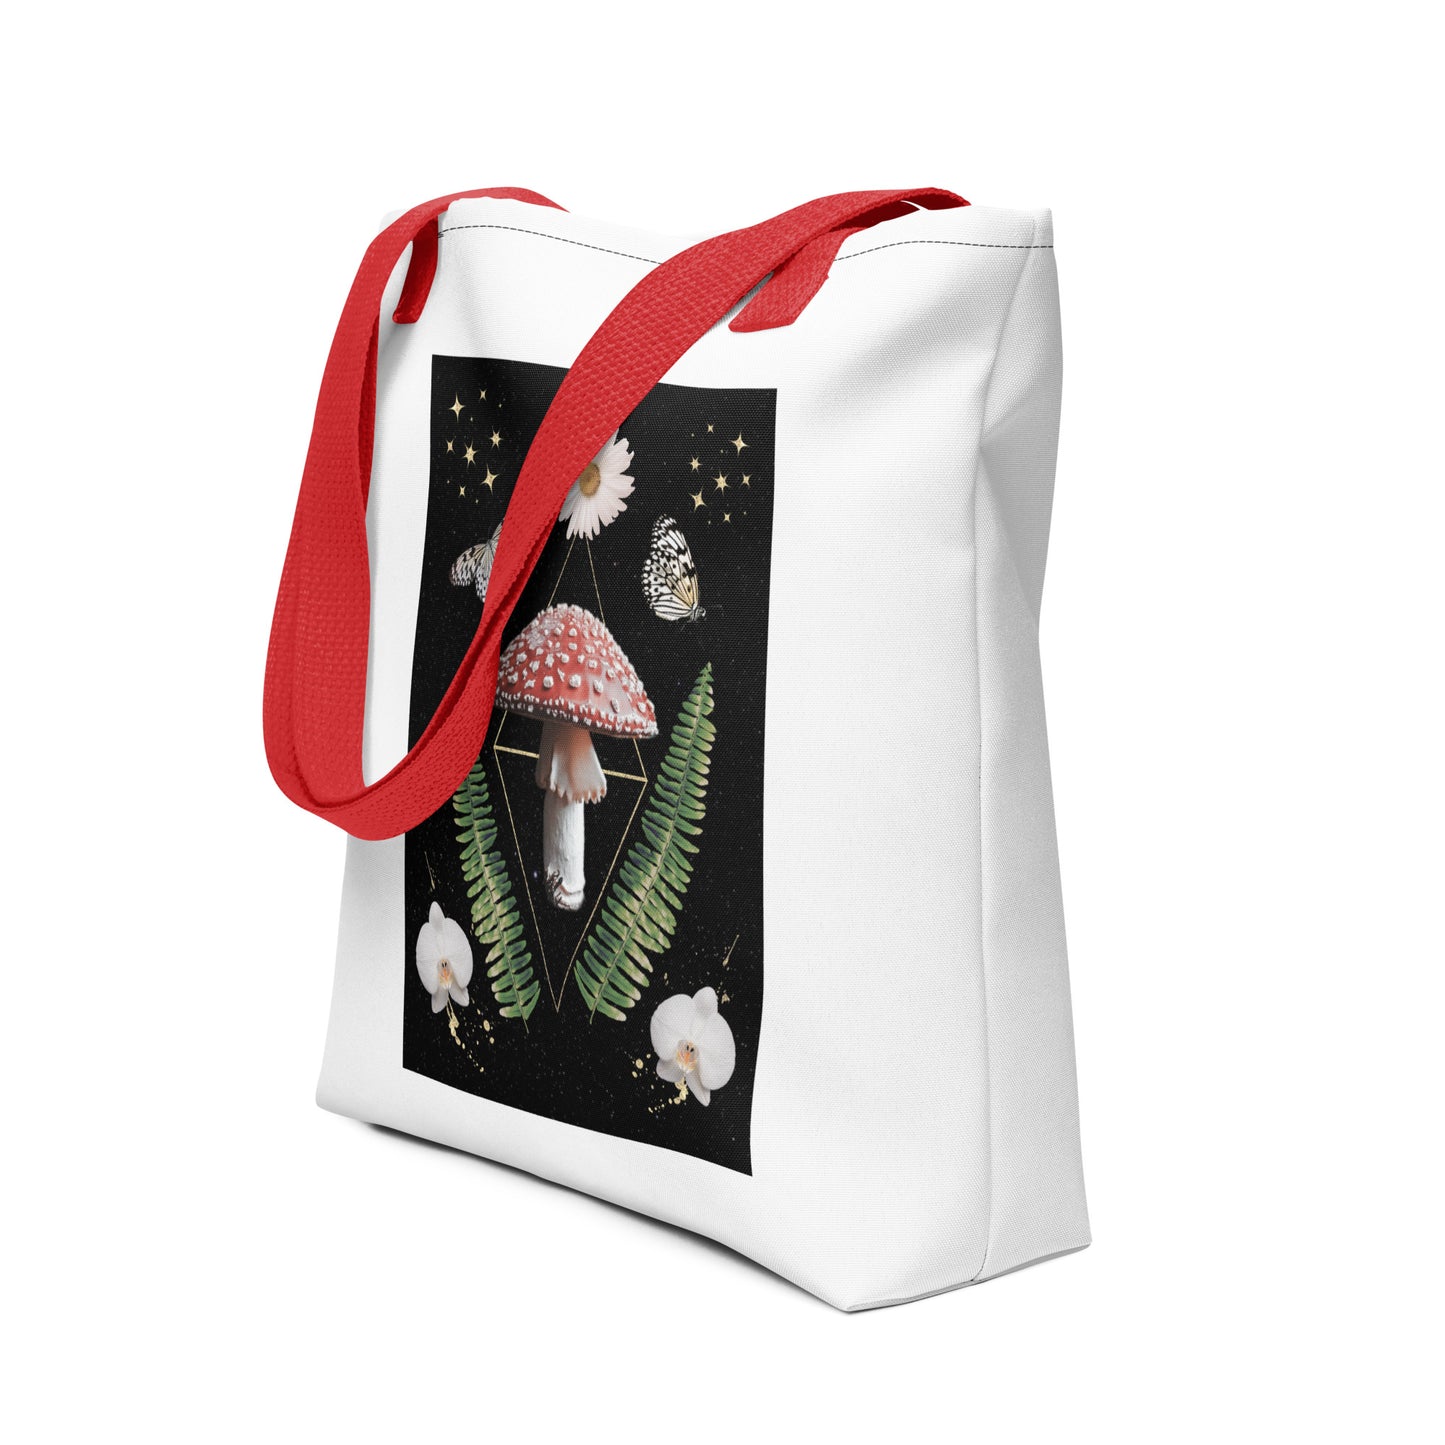 Gorgeous Woodland Mushroom Tote bag